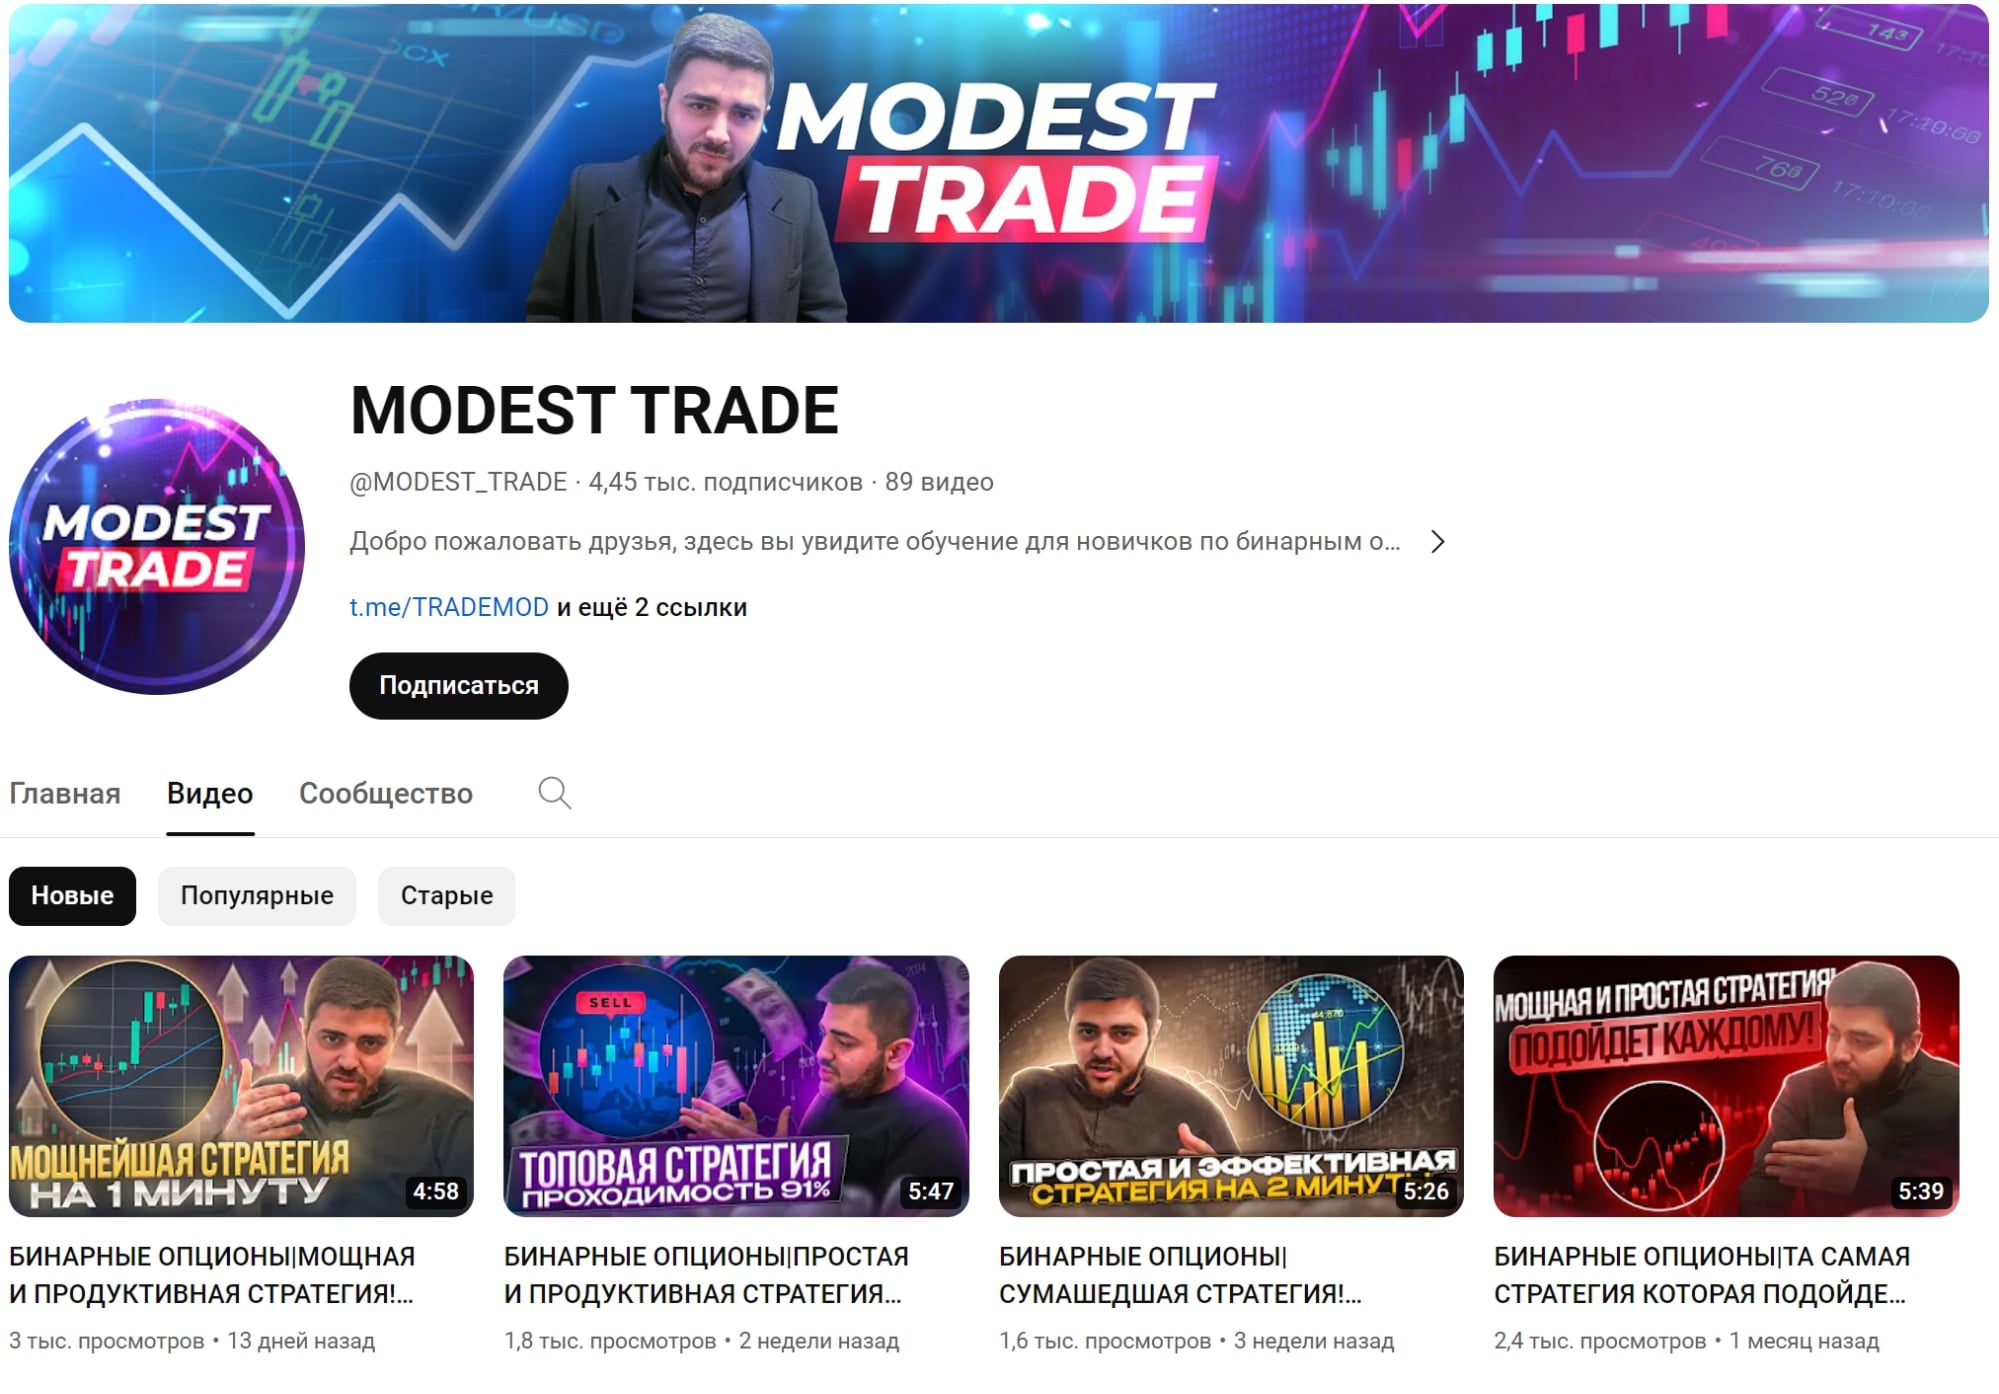 Modest Trade сайт